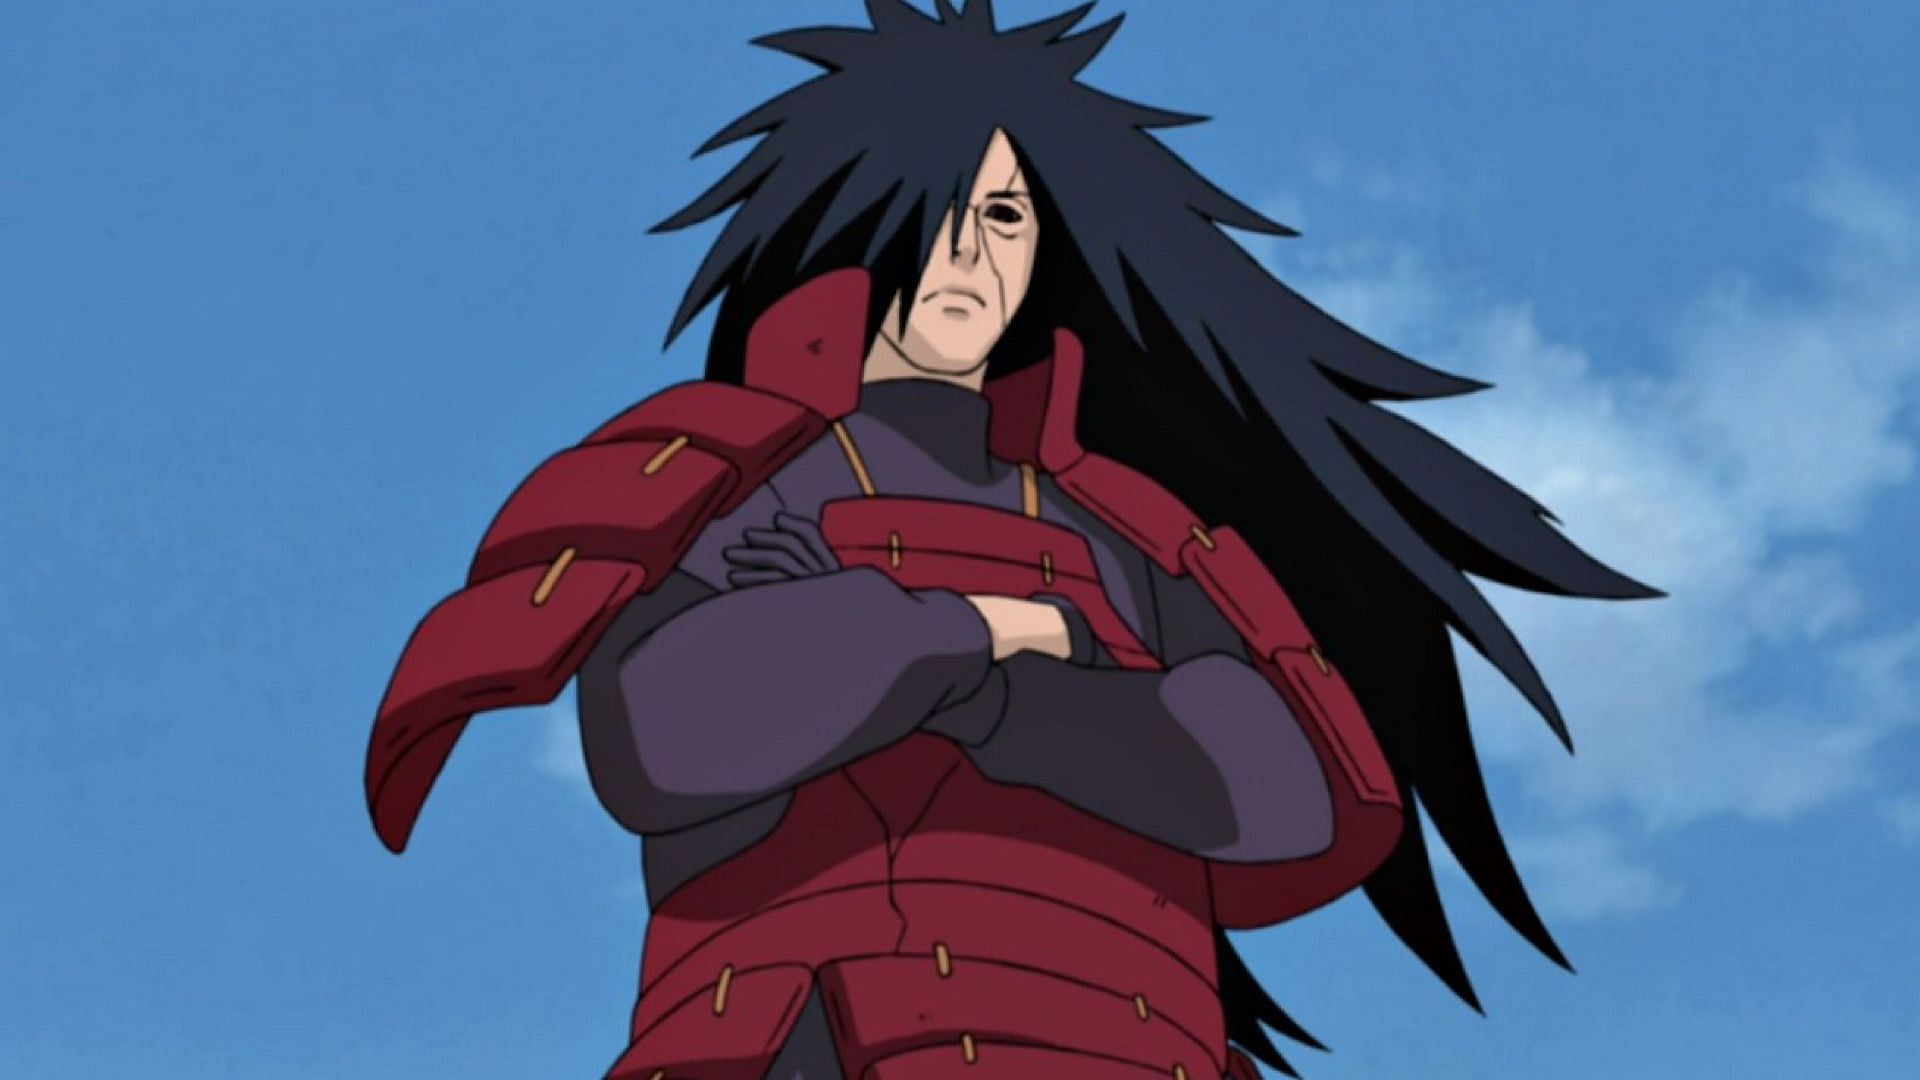 Madara Uchiha was considered a power-hungry Shinobi (Image via Naruto anime)